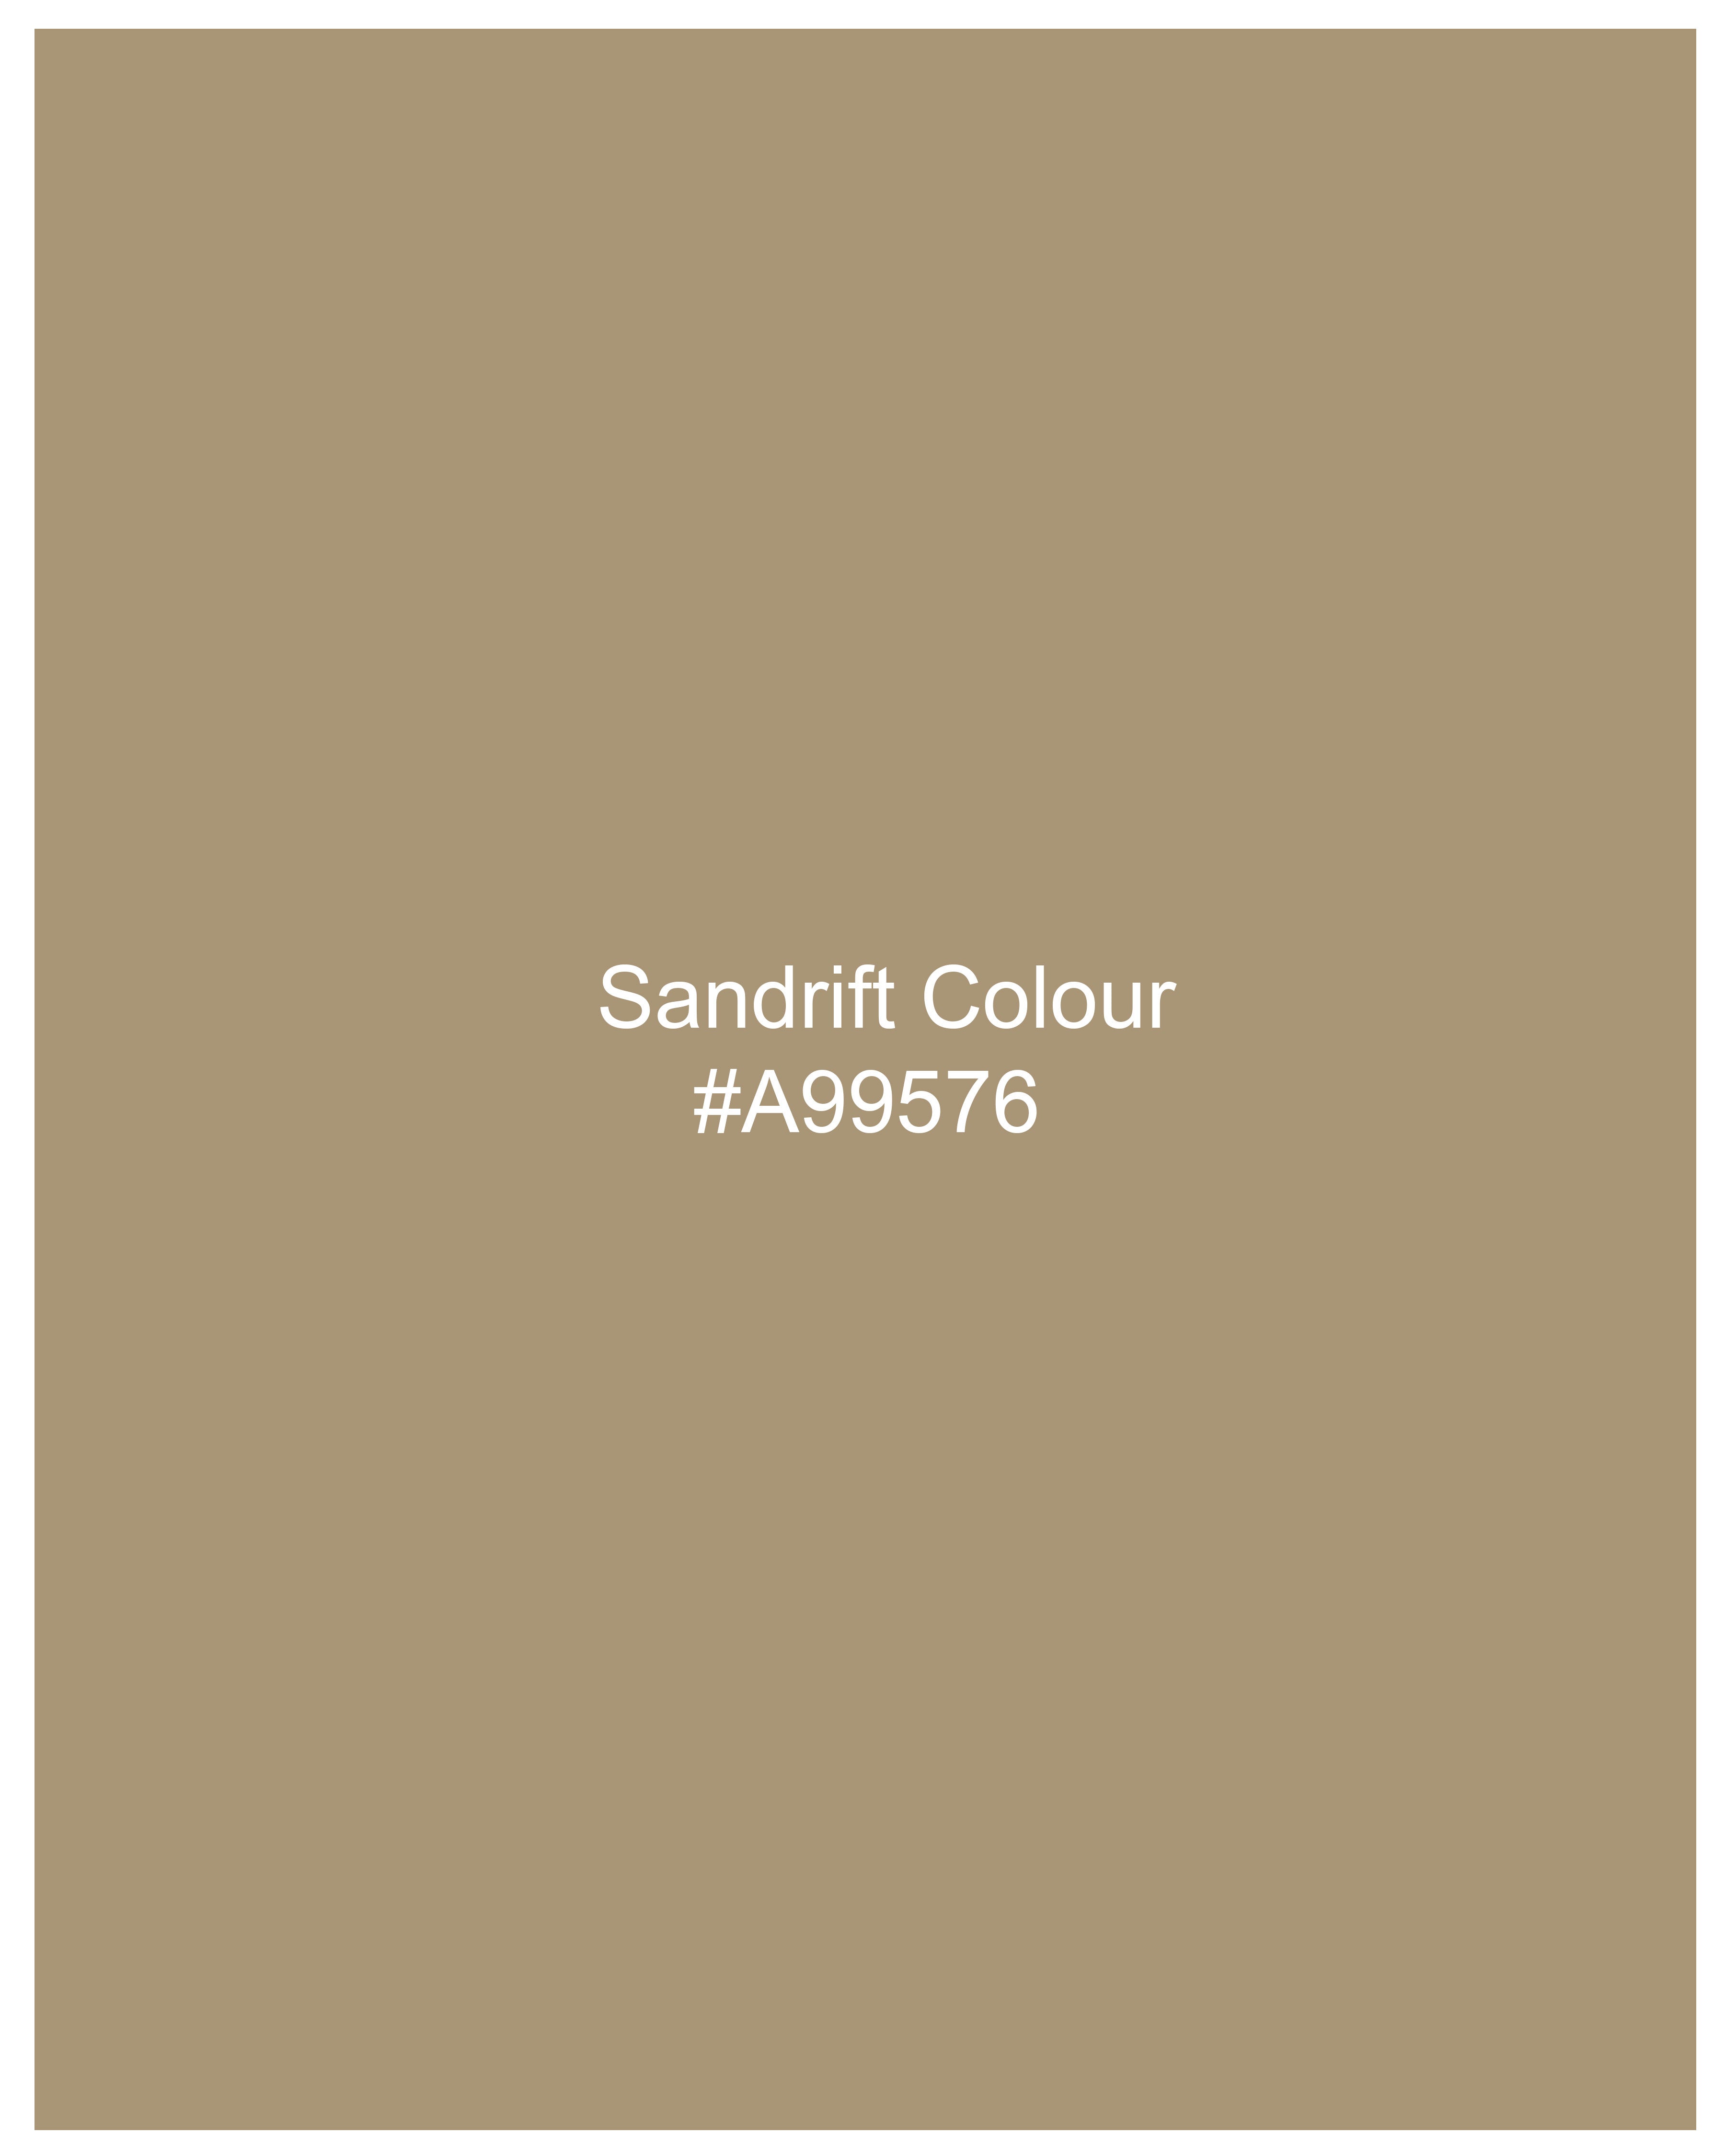 Sandrift Brown Premium Cotton Suit ST2310-SB-36, ST2310-SB-38, ST2310-SB-40, ST2310-SB-42, ST2310-SB-44, ST2310-SB-46, ST2310-SB-48, ST2310-SB-50, ST2310-SB-52, ST2310-SB-54, ST2310-SB-56, ST2310-SB-58, ST2310-SB-60